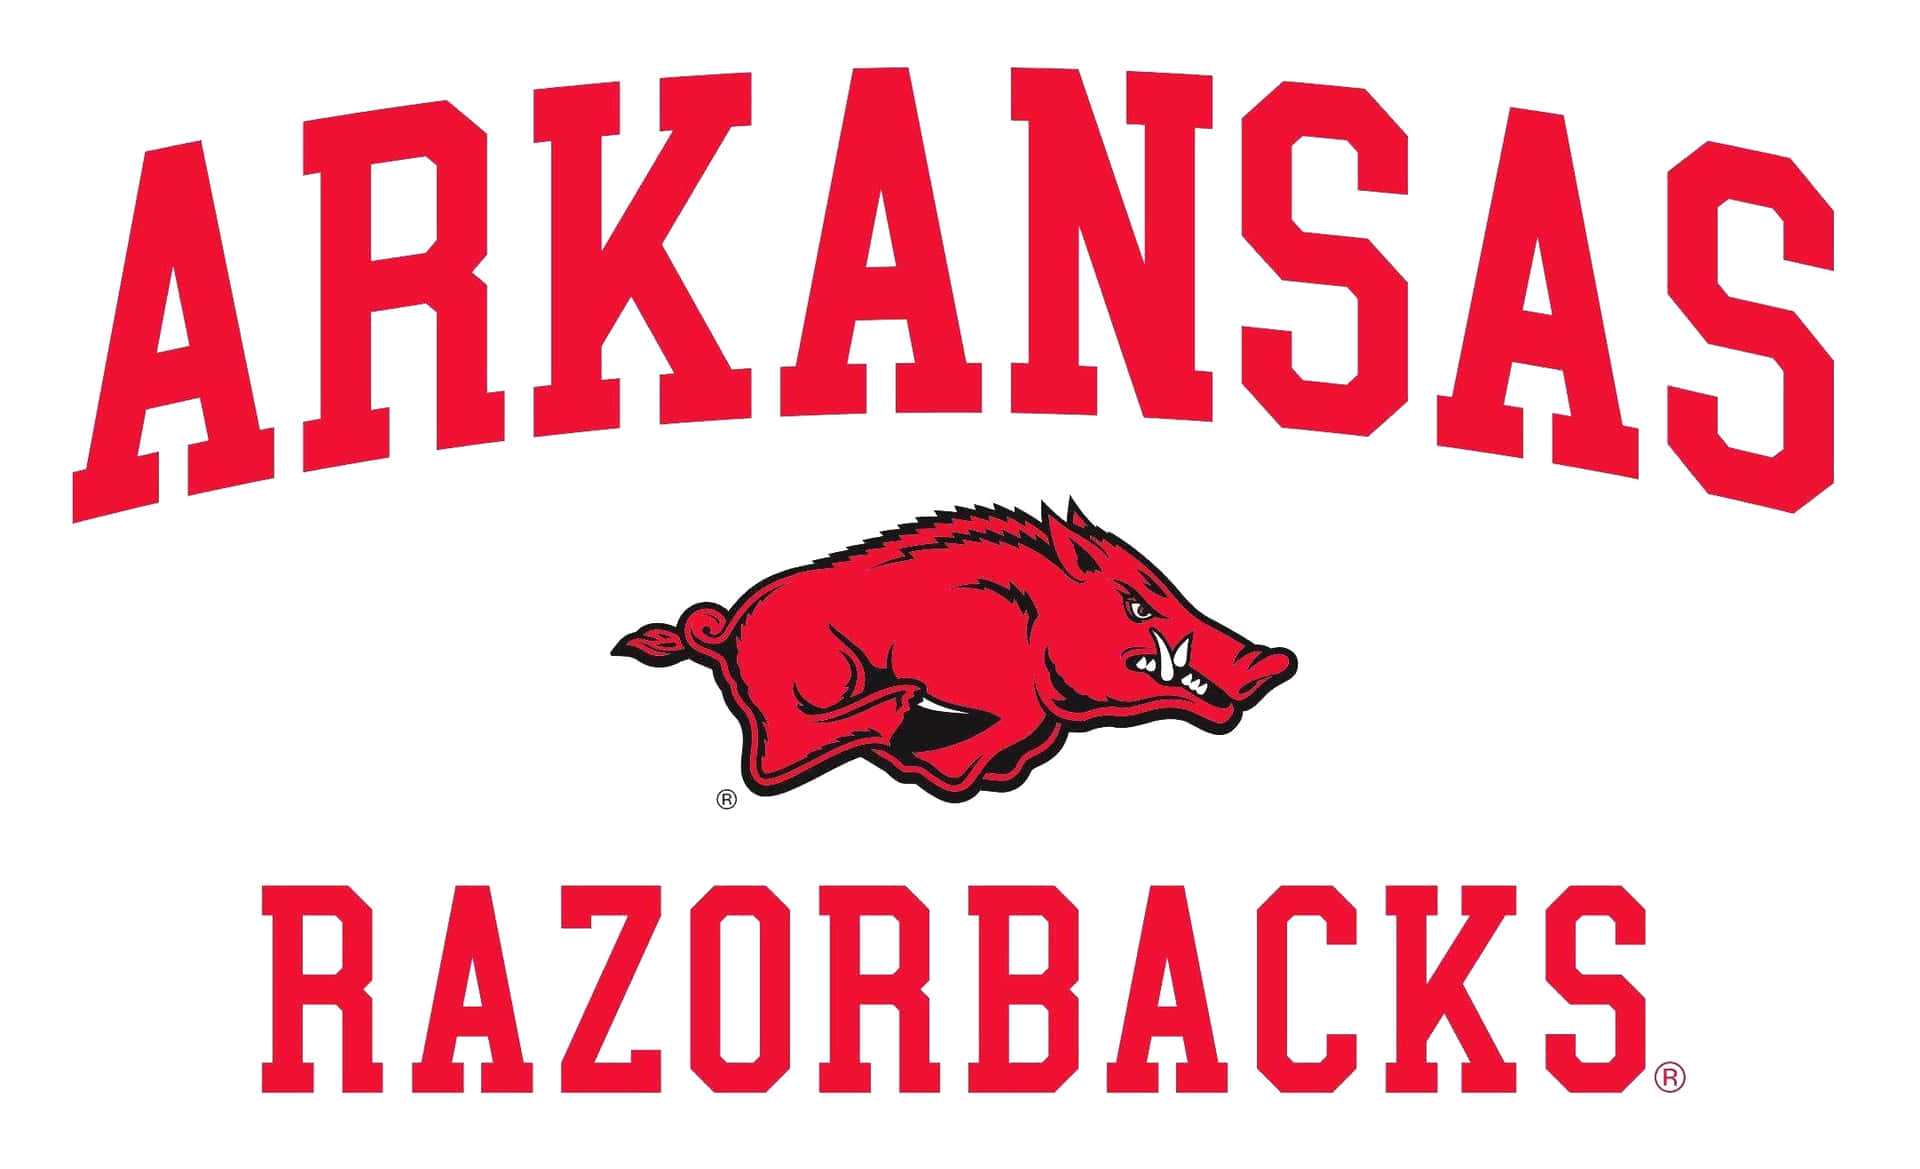 Get ready to cheer on the Arkansas Razorbacks! Wallpaper